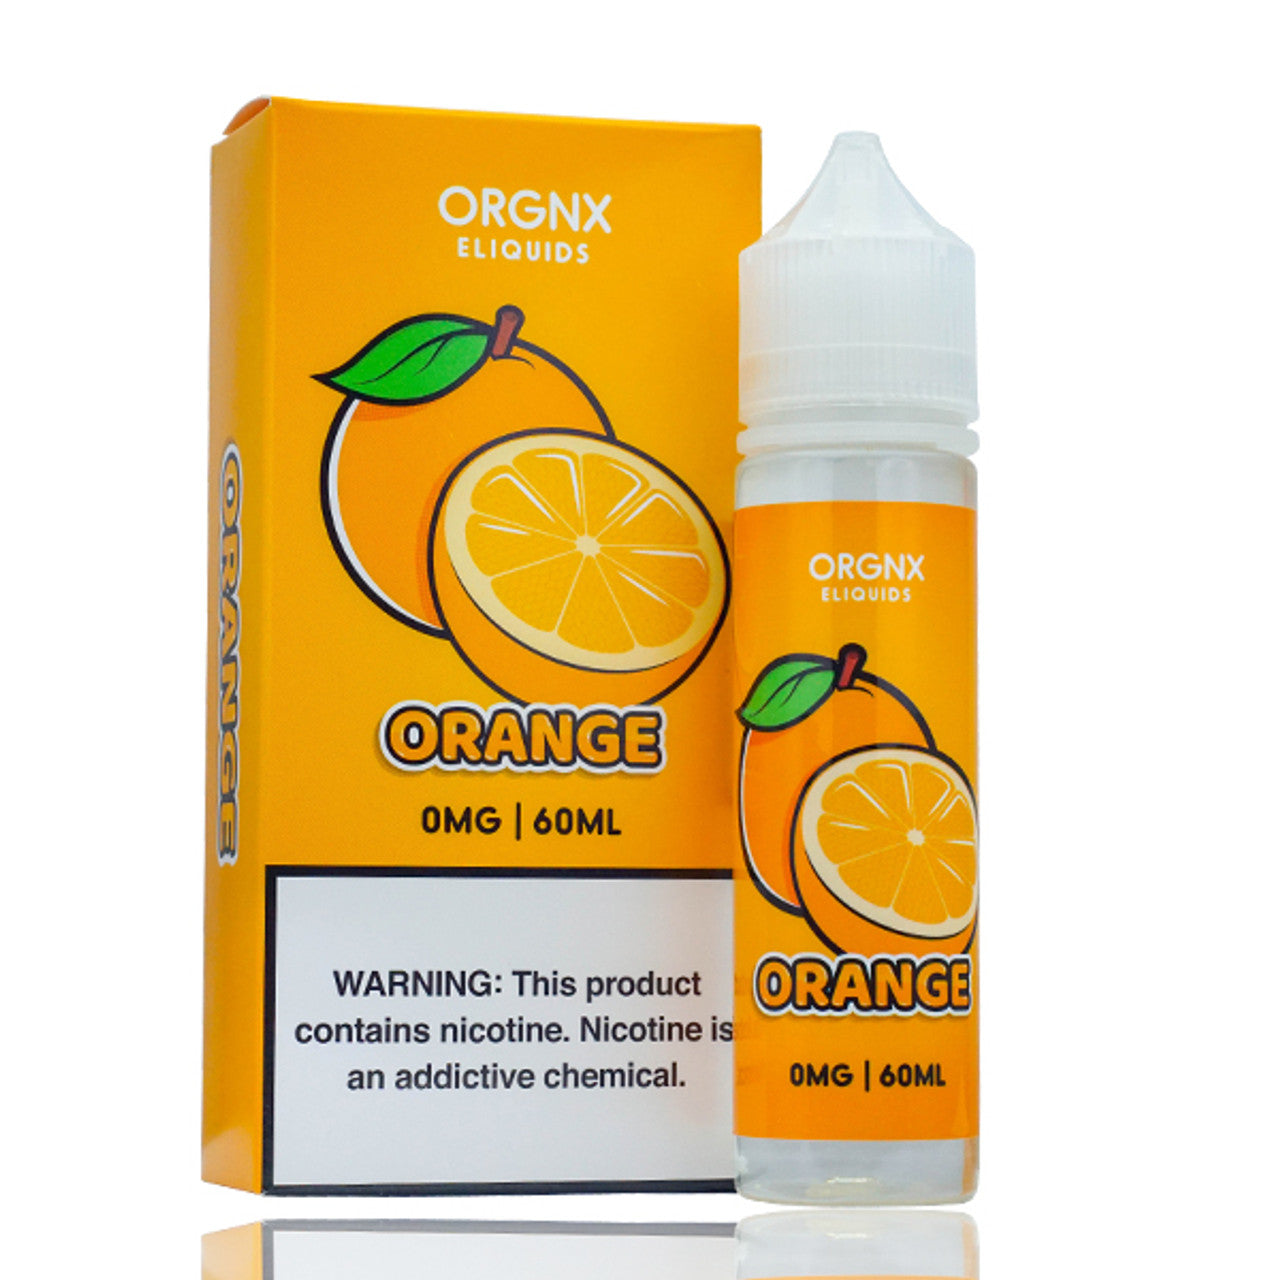 ORGNX E-Liquids Orange - 60ml